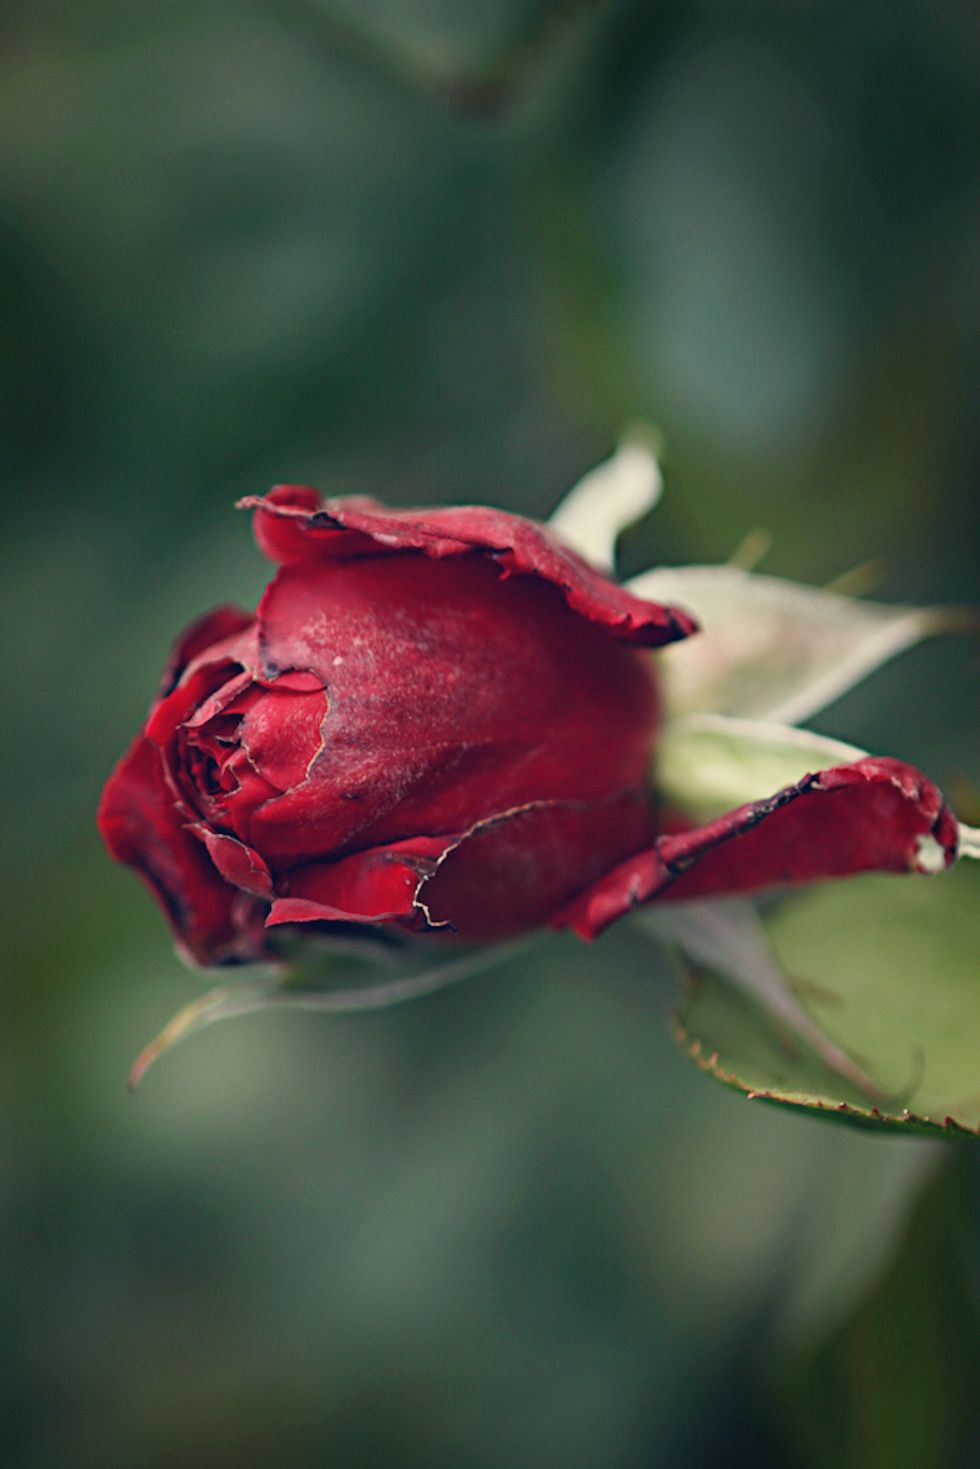 Poetry on Odyssey: A Bleeding Rose